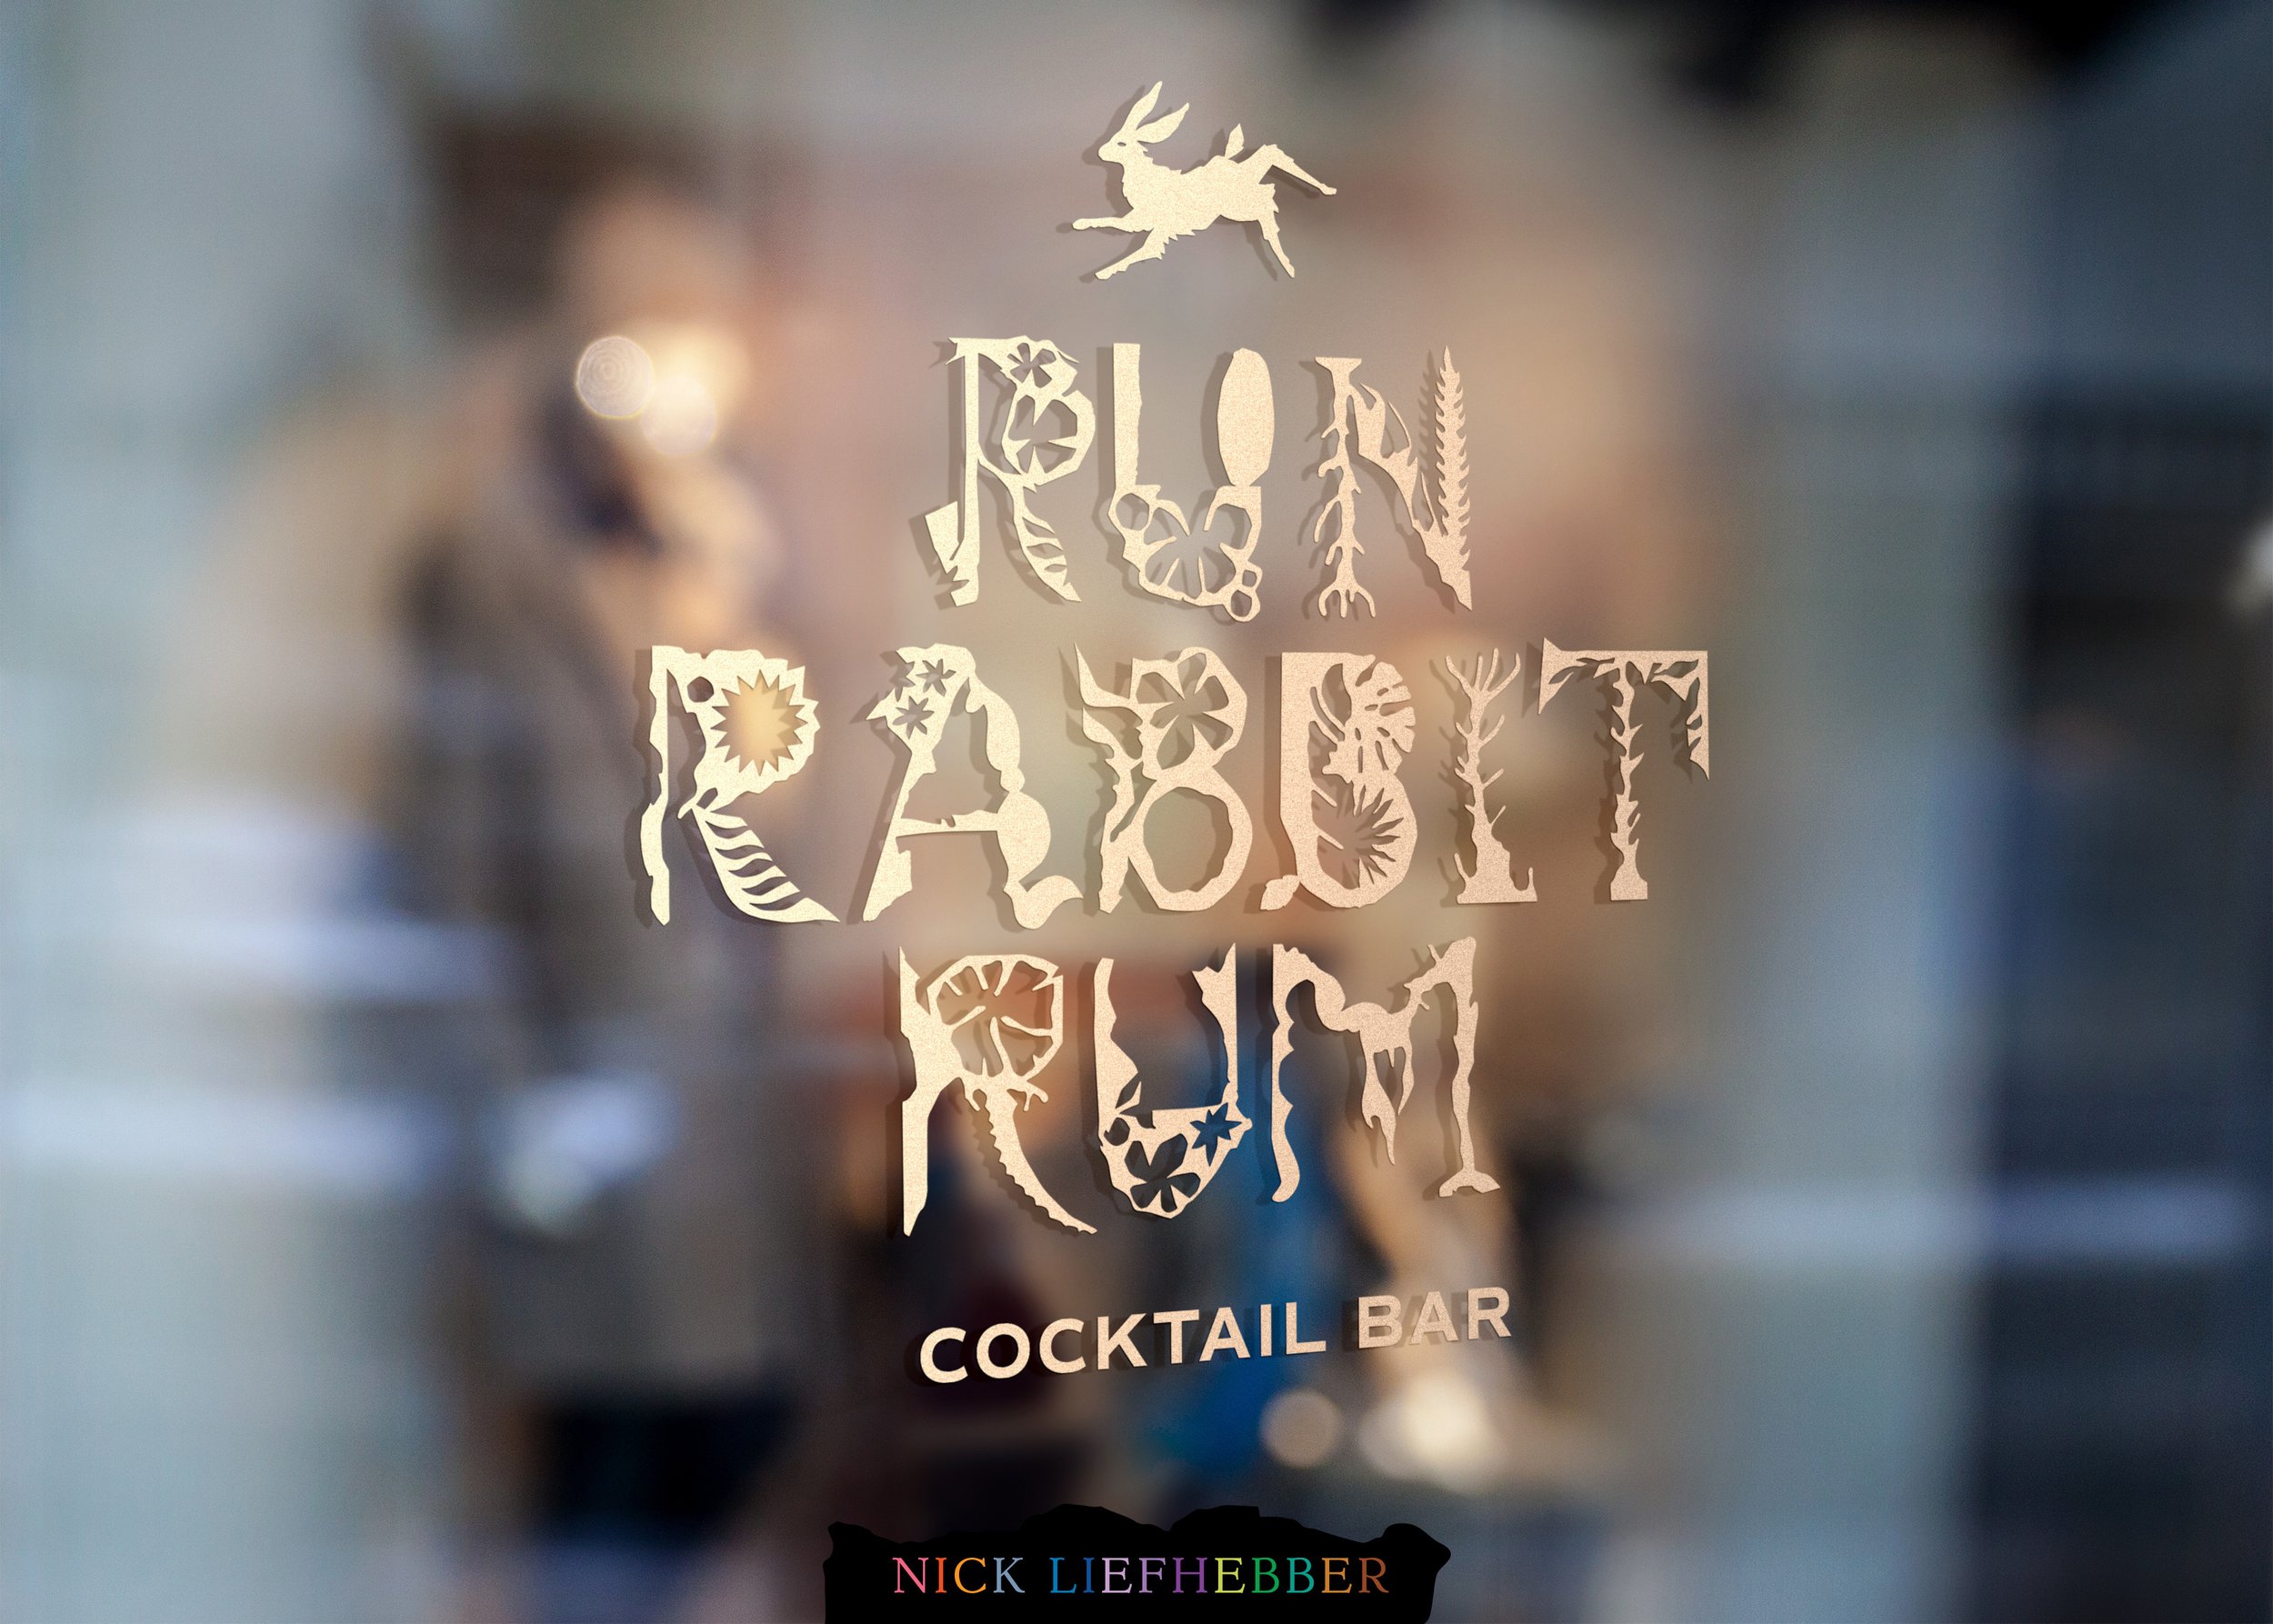 Nick-Liefhebber-Run-Rabbit-Rum-Lettering-mockup2.jpg